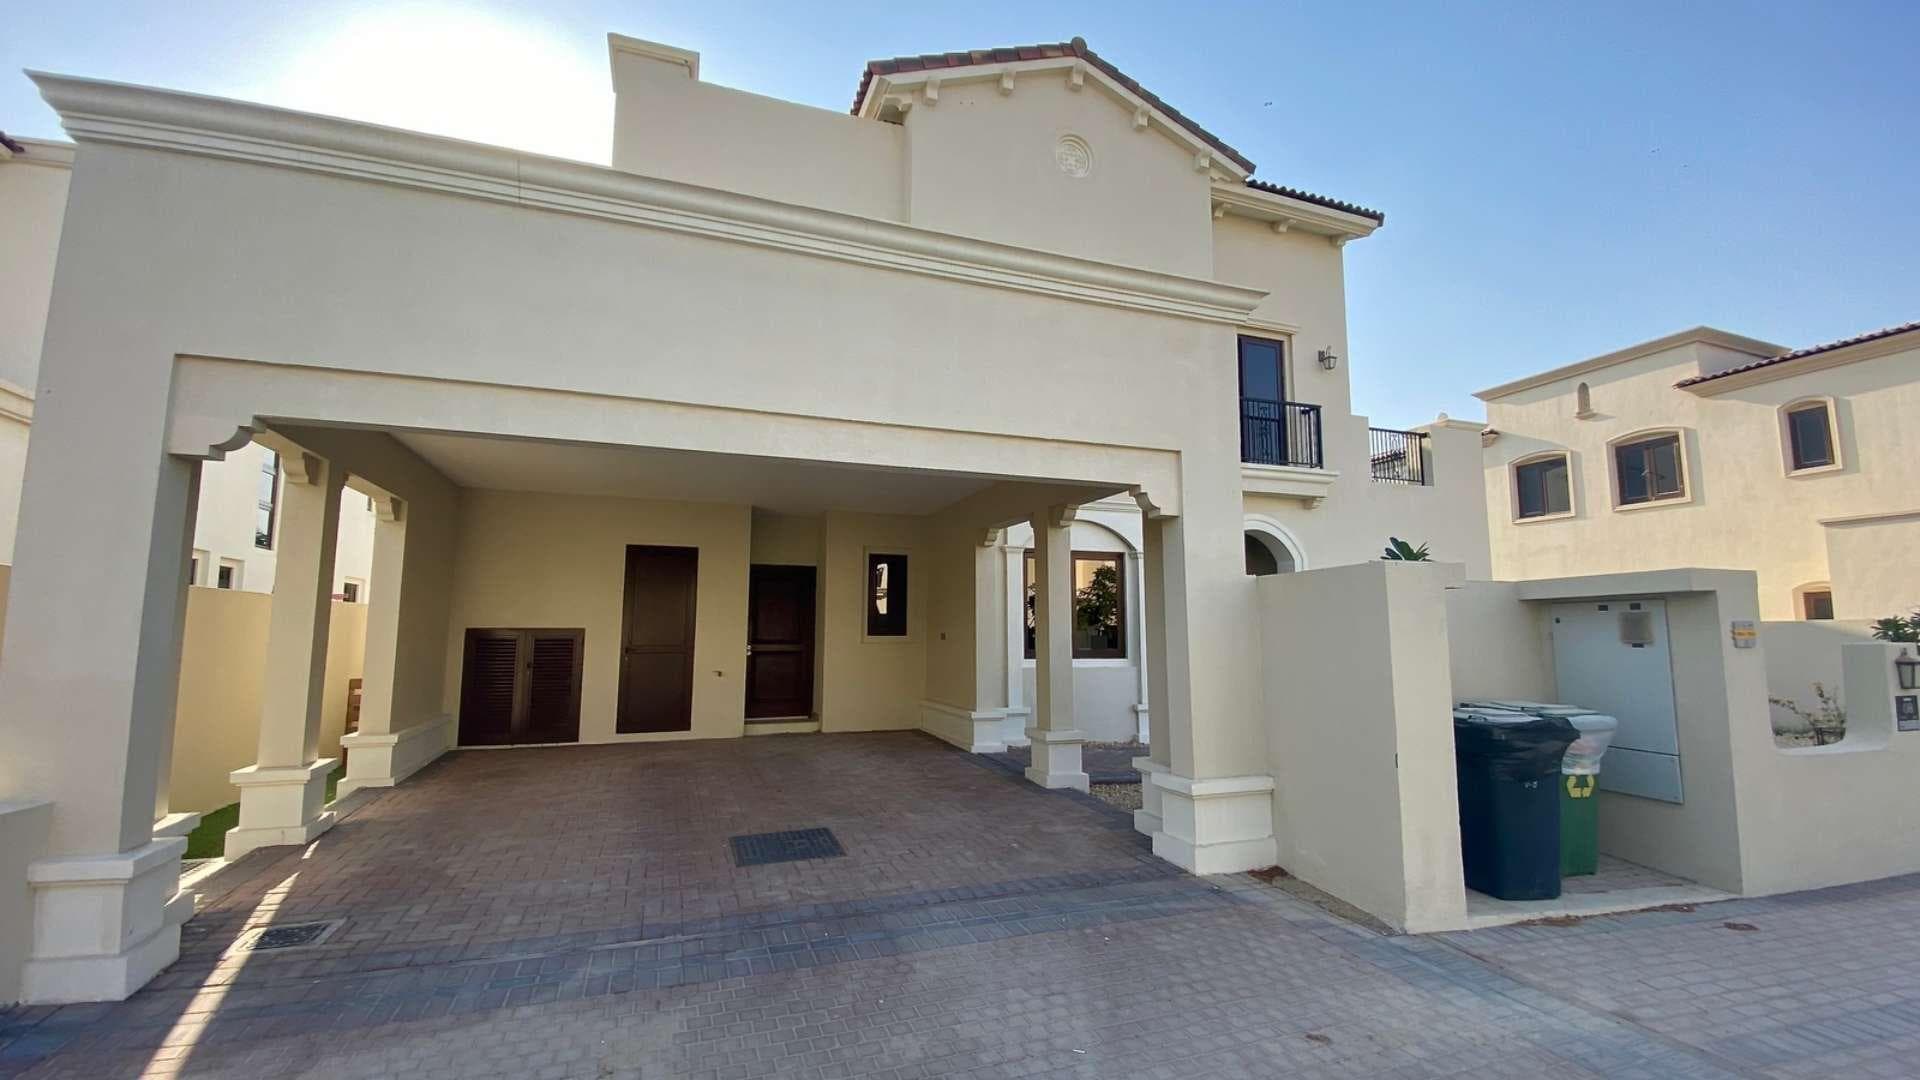 6 Bedroom Villa For Sale Aseel Lp37478 208a8efb96b48800.jpg